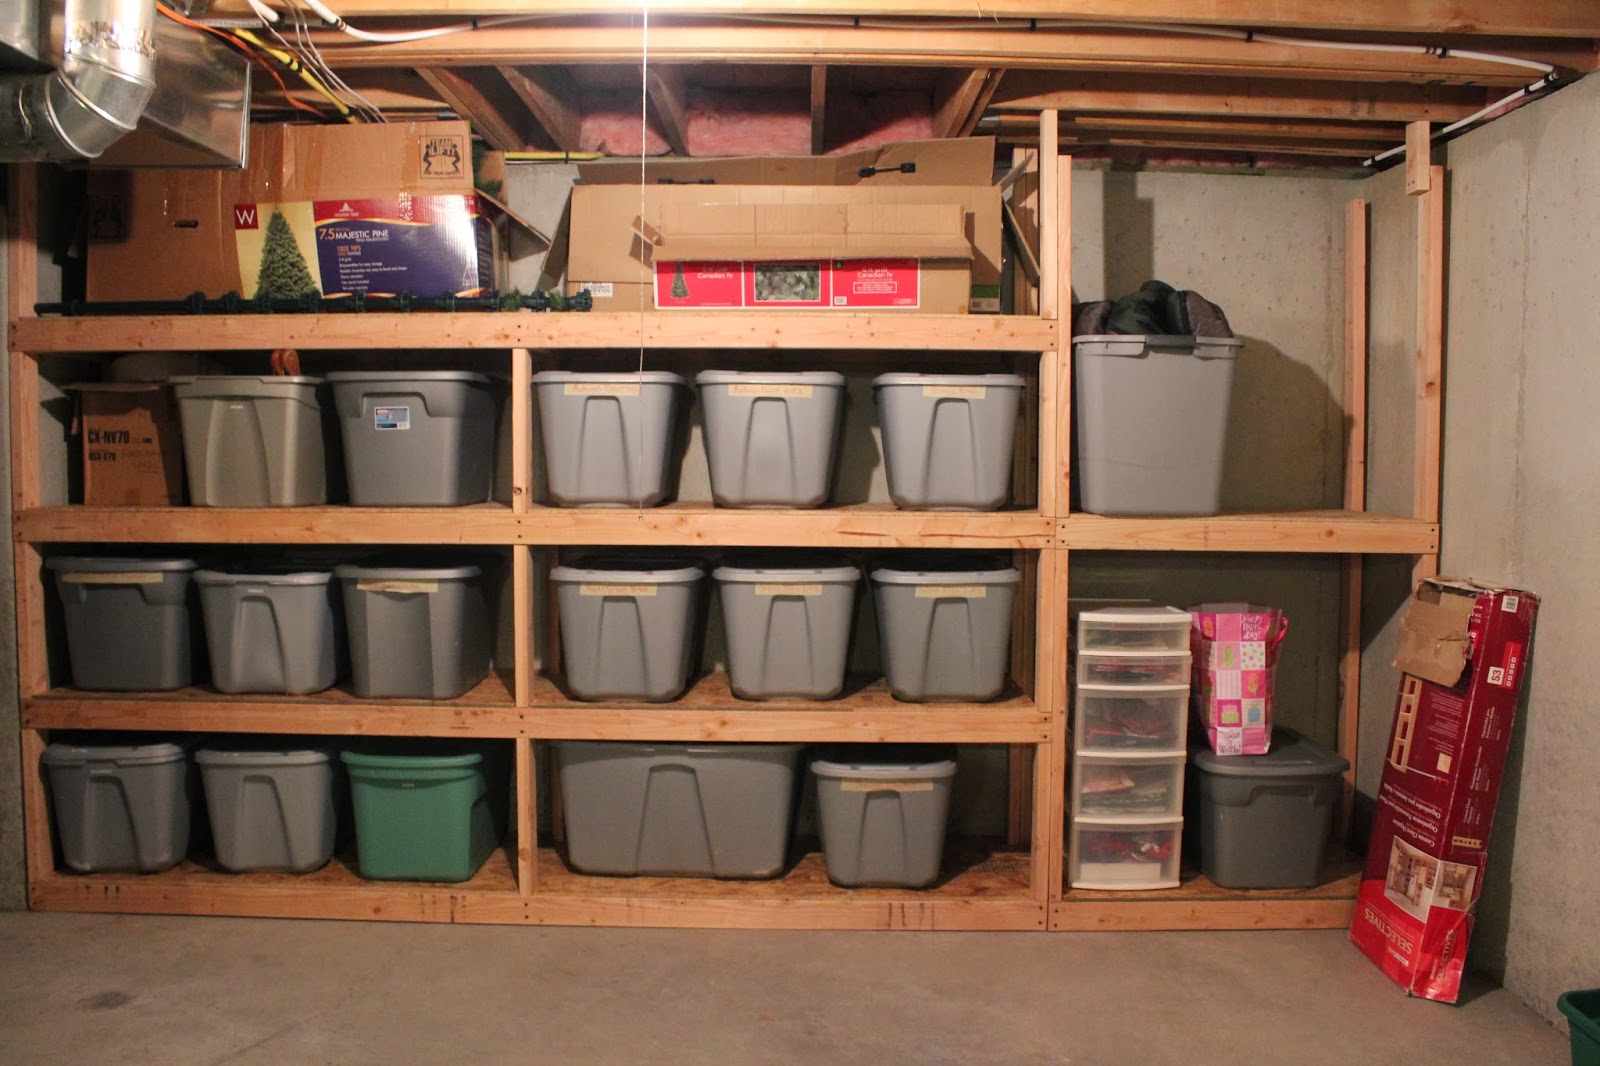 https://budgetdry.com/wp-content/uploads/2018/04/shelves-for-basement-storage-remodel-interior-planning-house-ideas.jpg